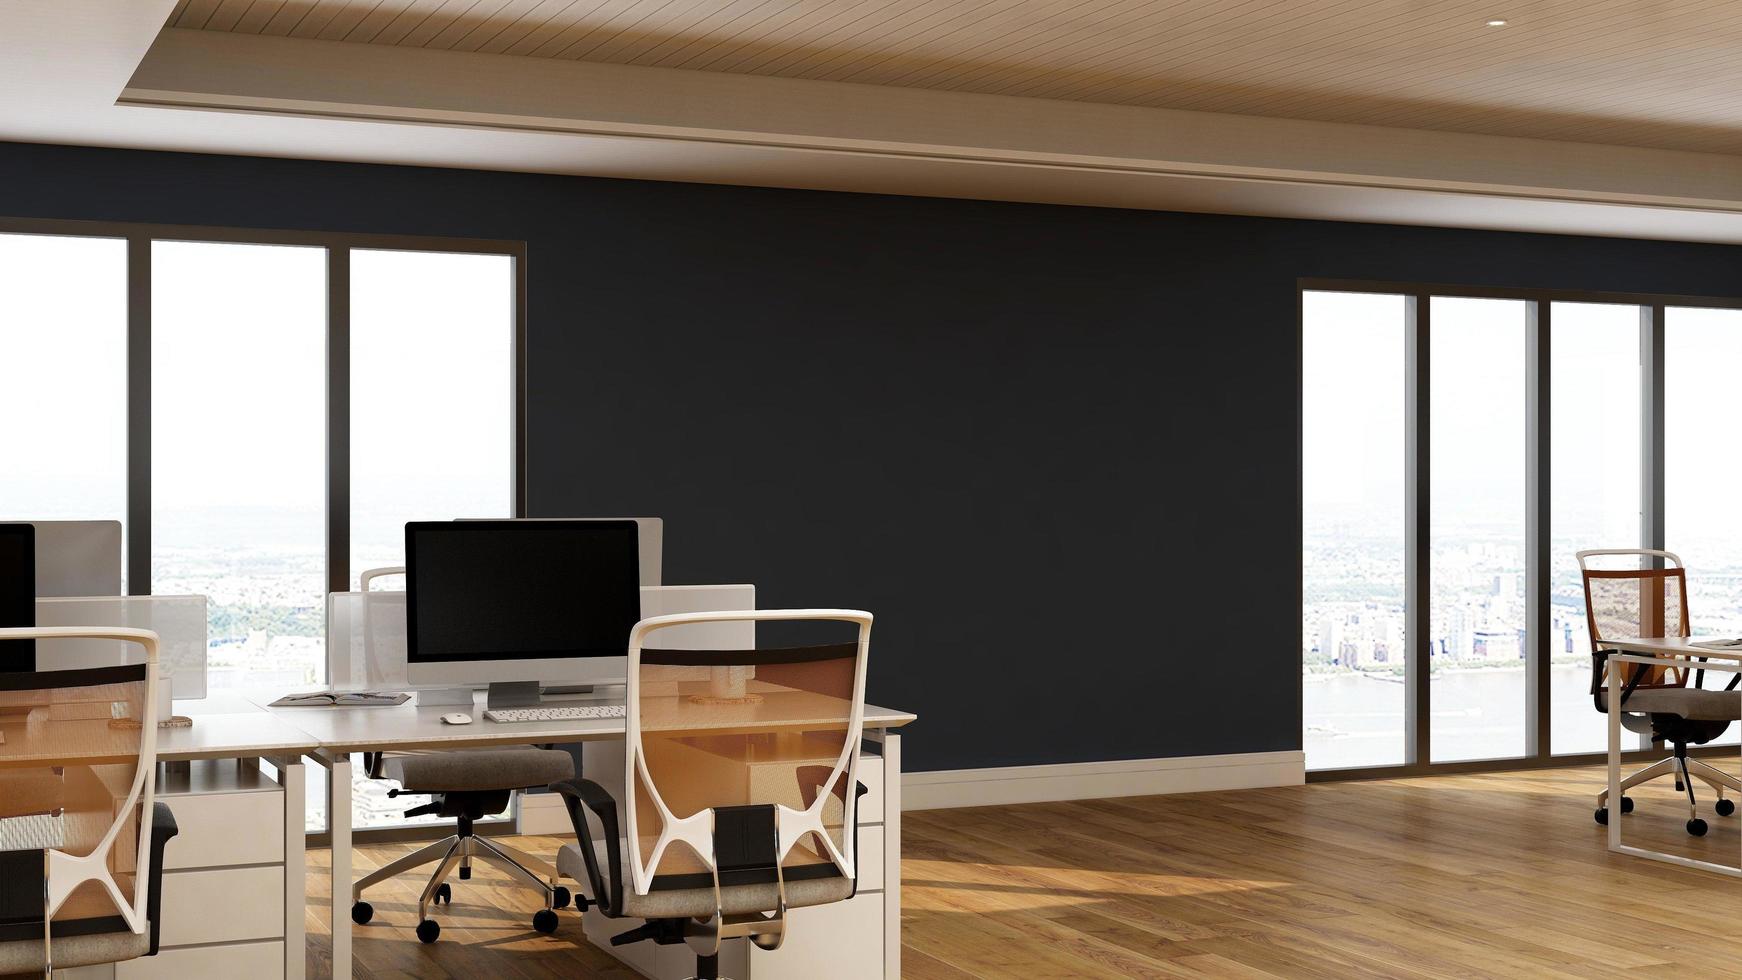 3d render kantoor werkruimte moderne minimalistische mockup foto